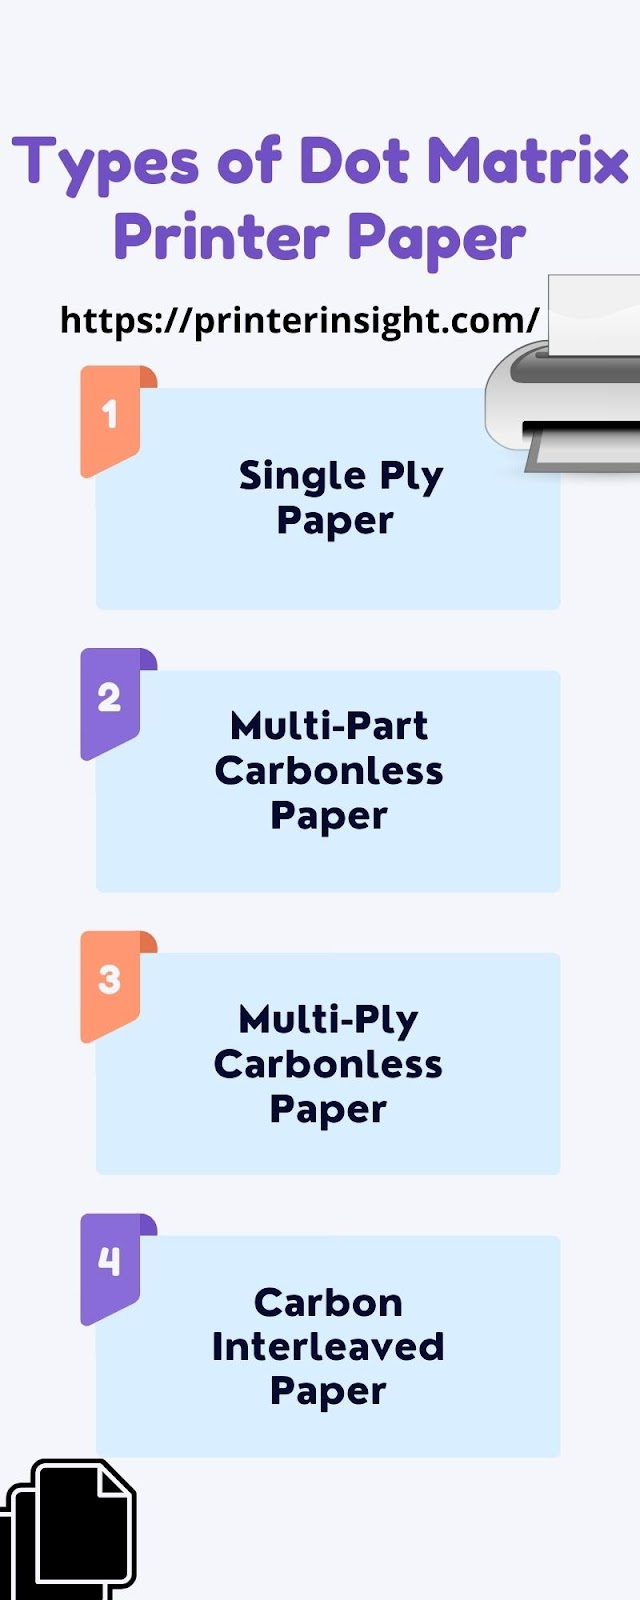 Types of Dot Matrix Printer Paper